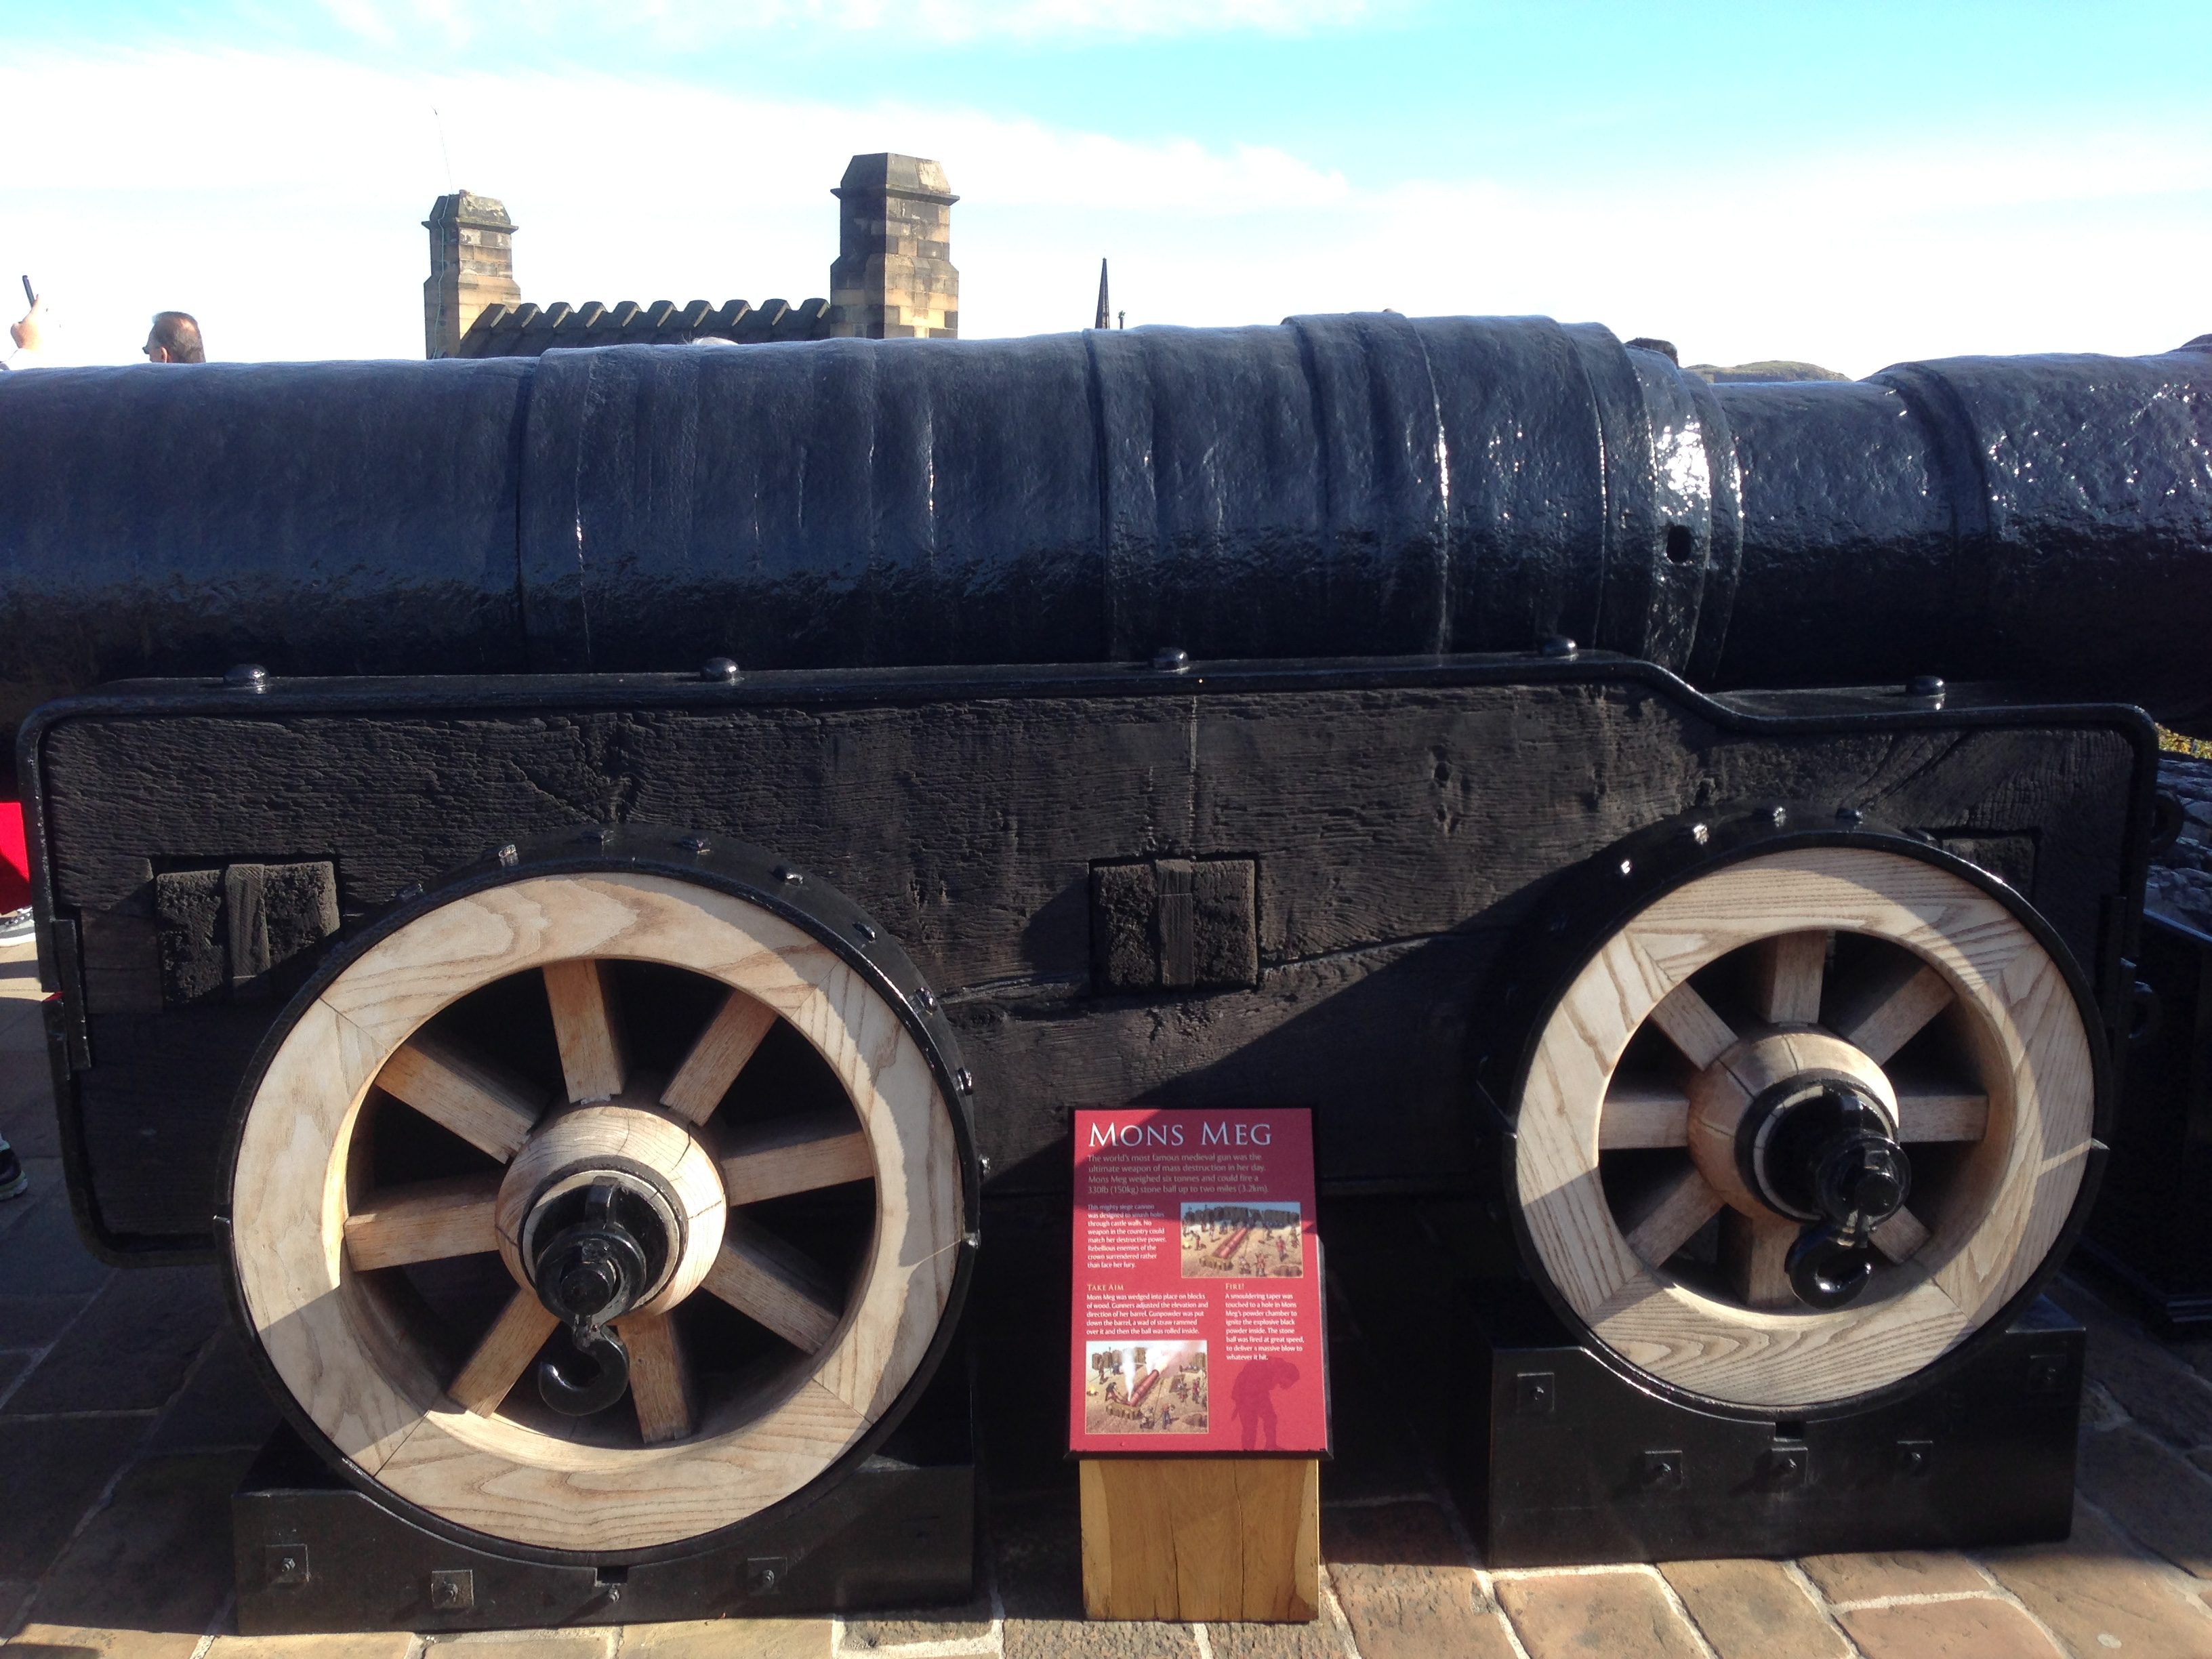 Mons Meg - the iconic barrel associated with Edinburgh Castle